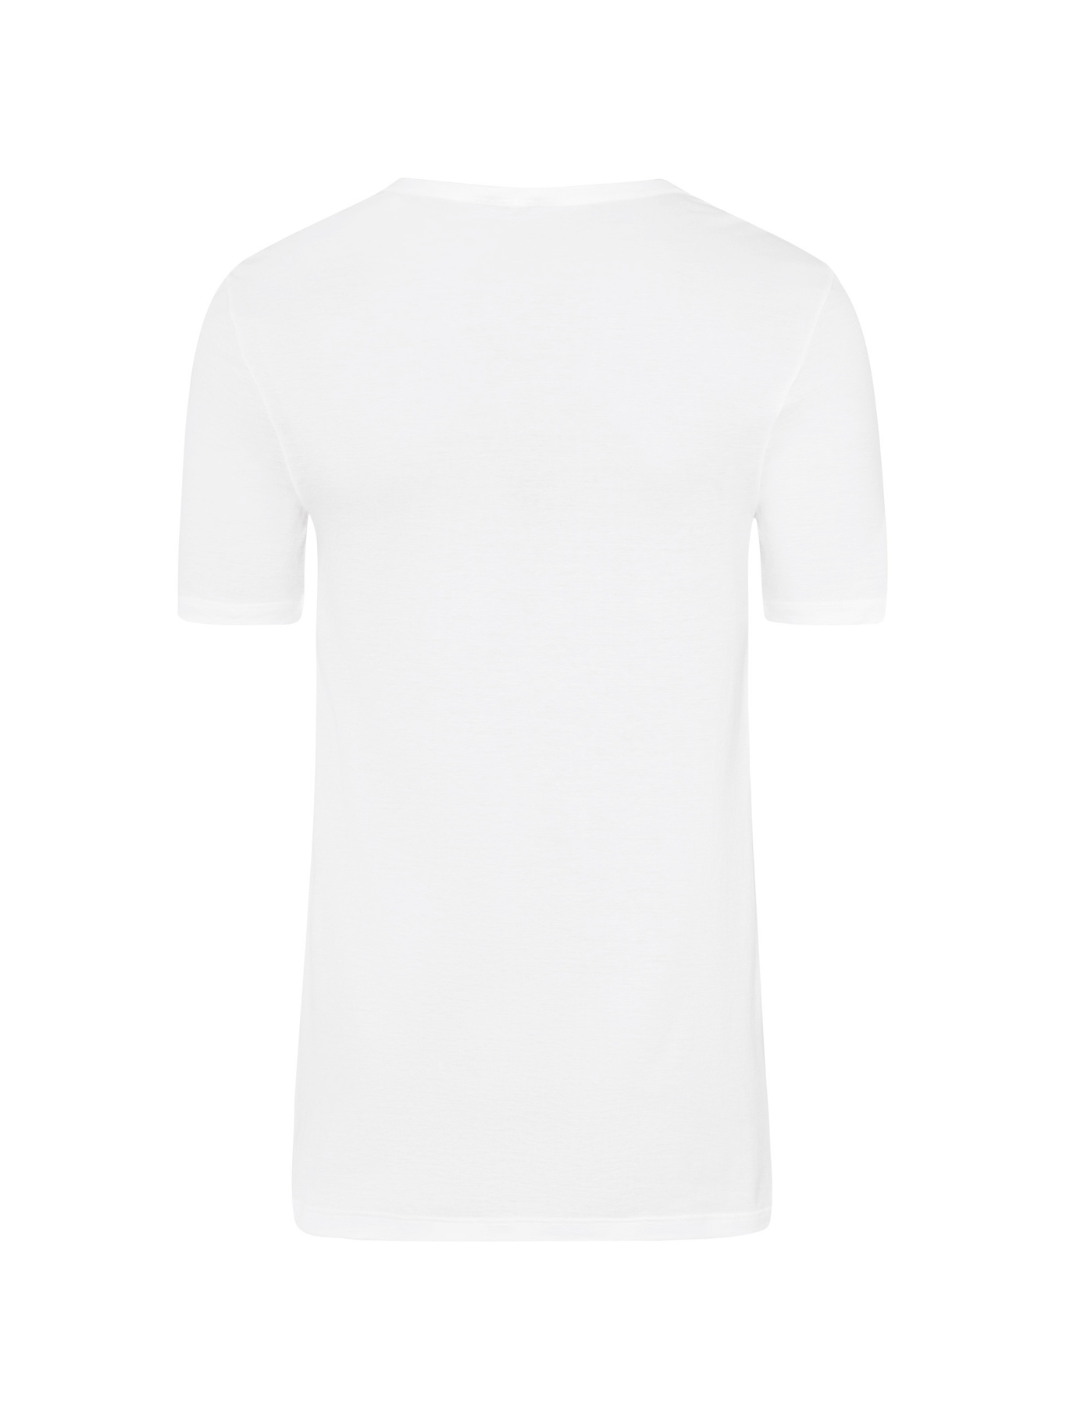 Ultralight V-Shirt - Weiß